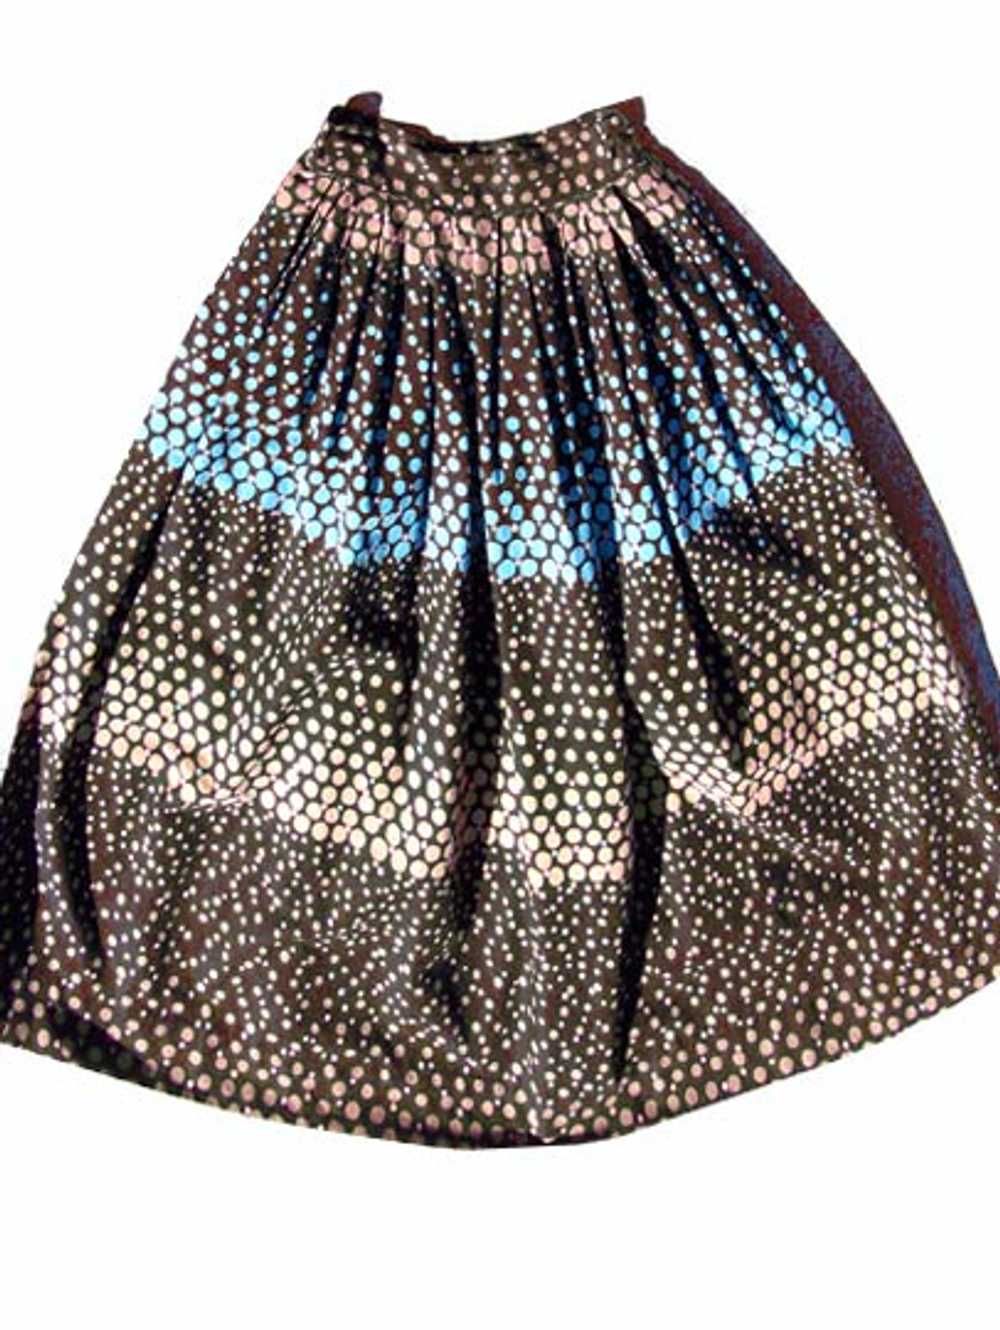 Atomic polka-dot skirt - image 3